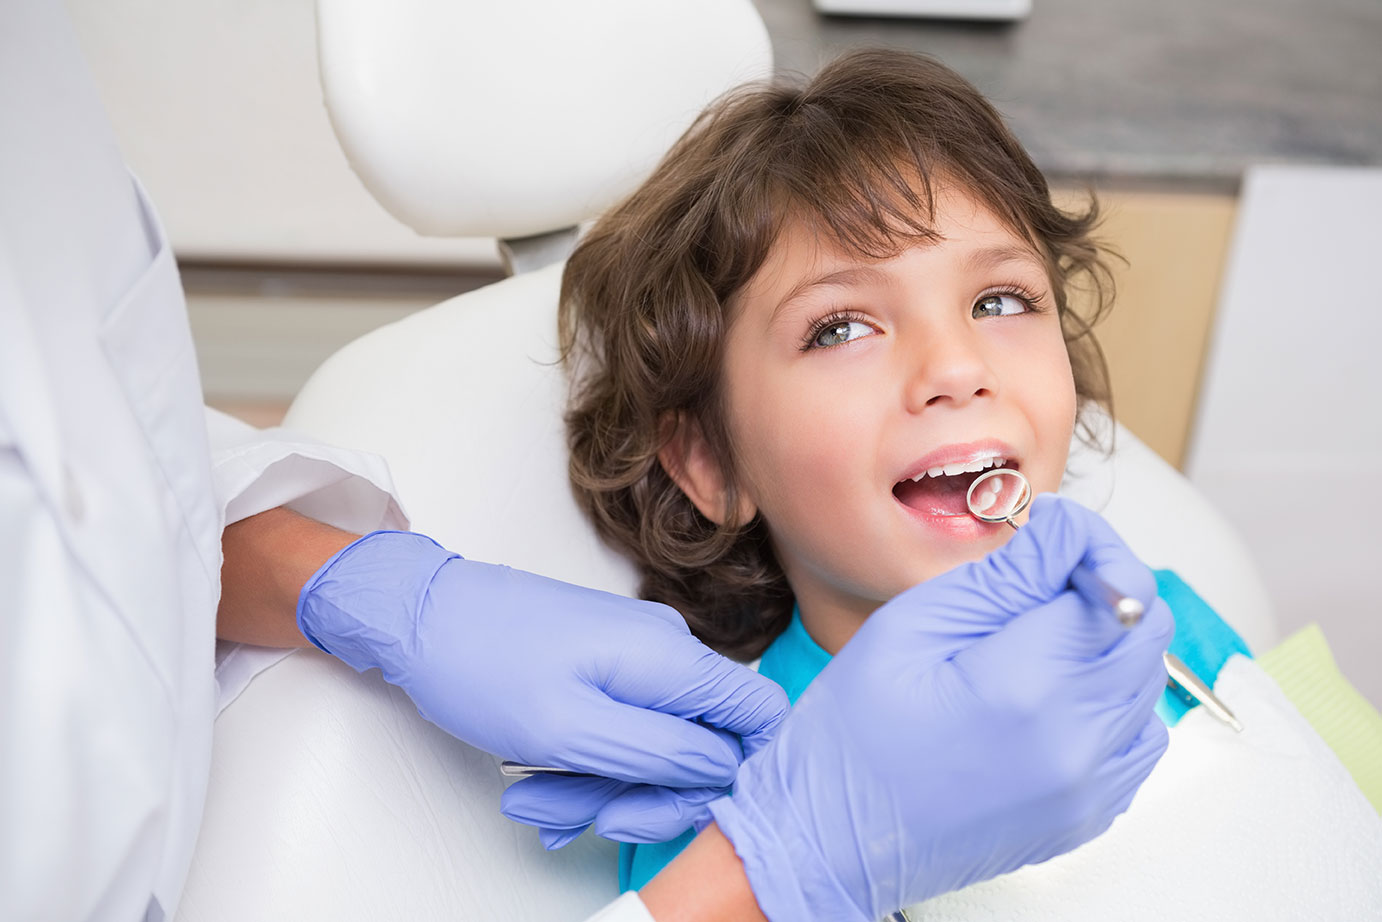 Asistencia Dental Infantil PADI en clínica Etxegorri